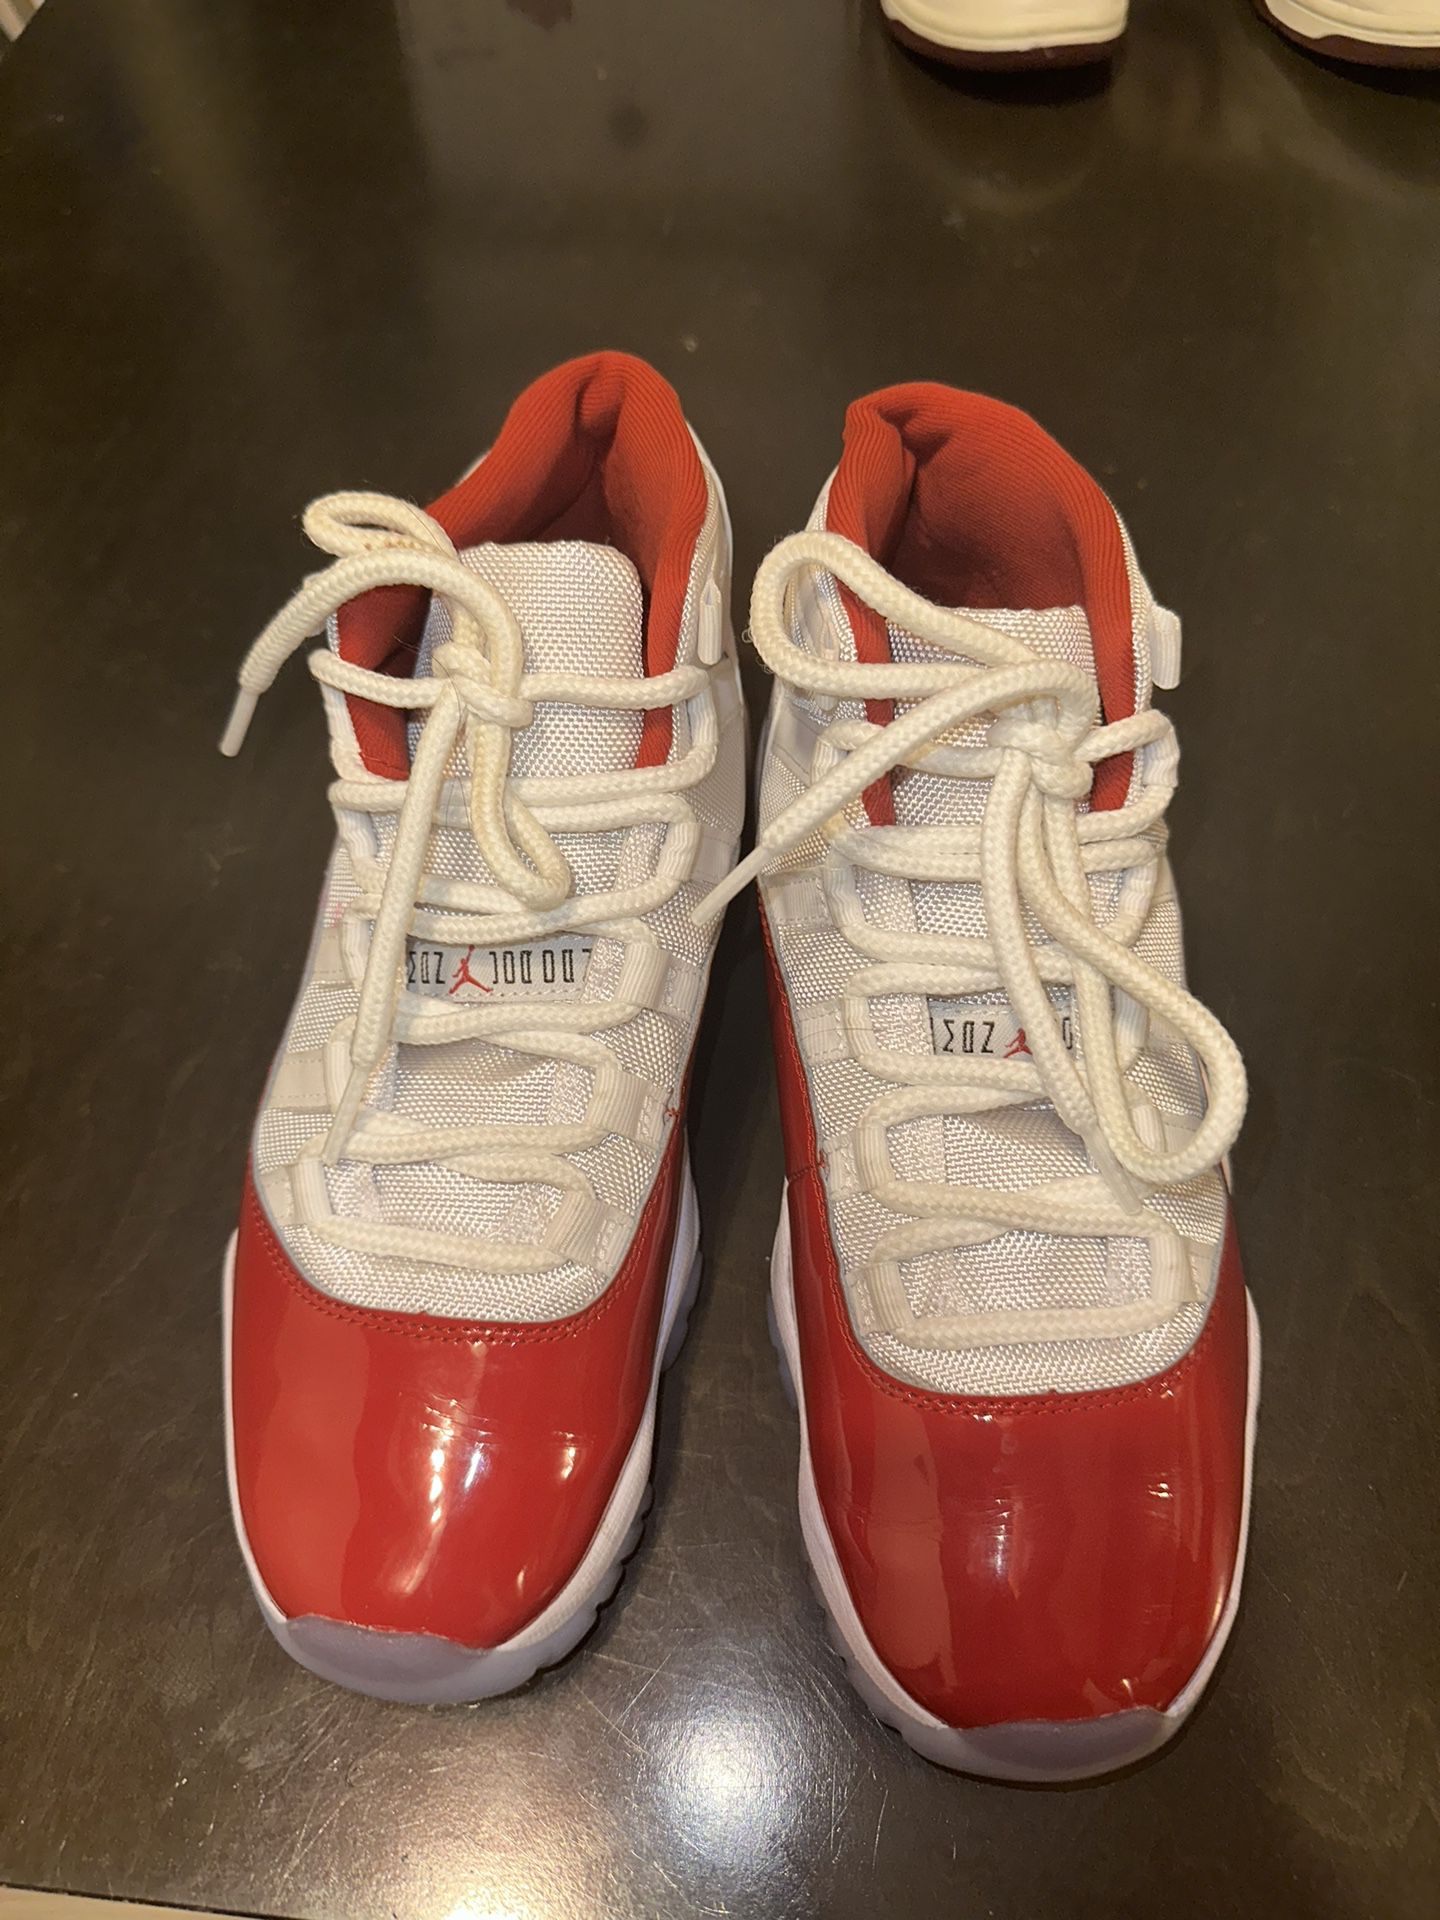 Air Jordan Retro ( Size 7.5 Men )